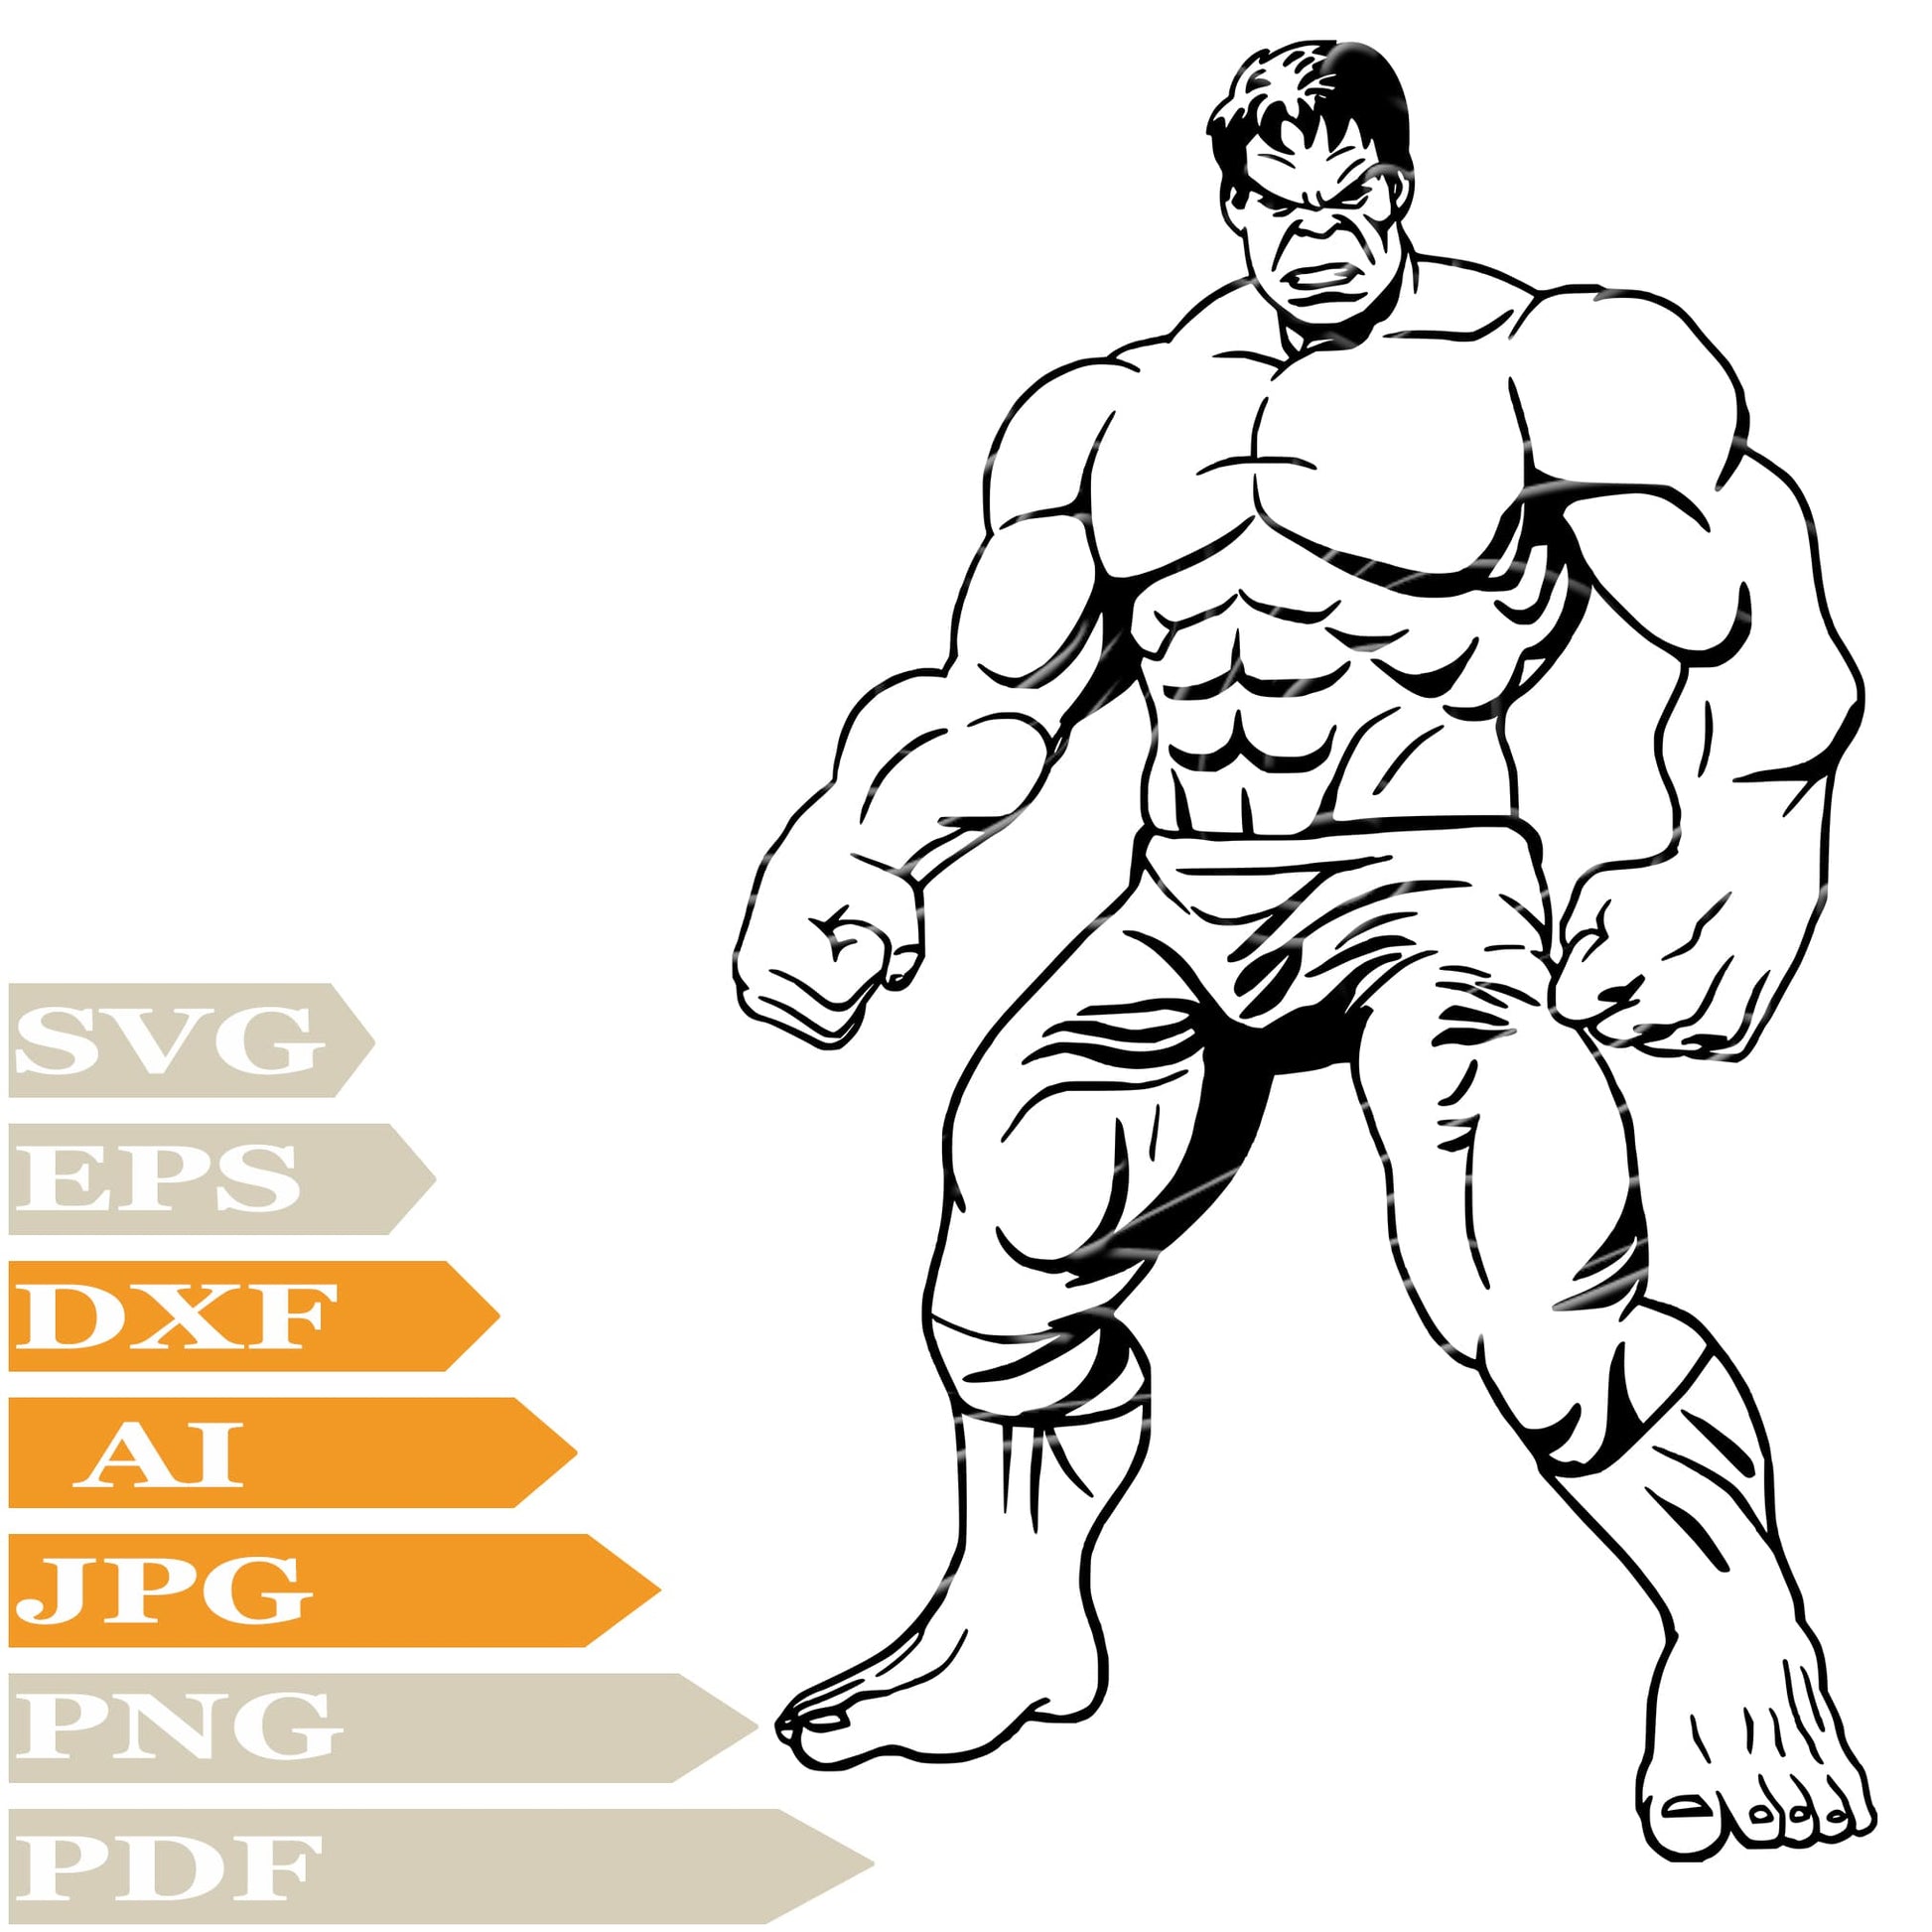 Hulk, Hulk Big Man Svg File, Image Cut, Png, For Tattoo, Silhouette, Digital Vector Download, Cut File, Clipart, For Cricut